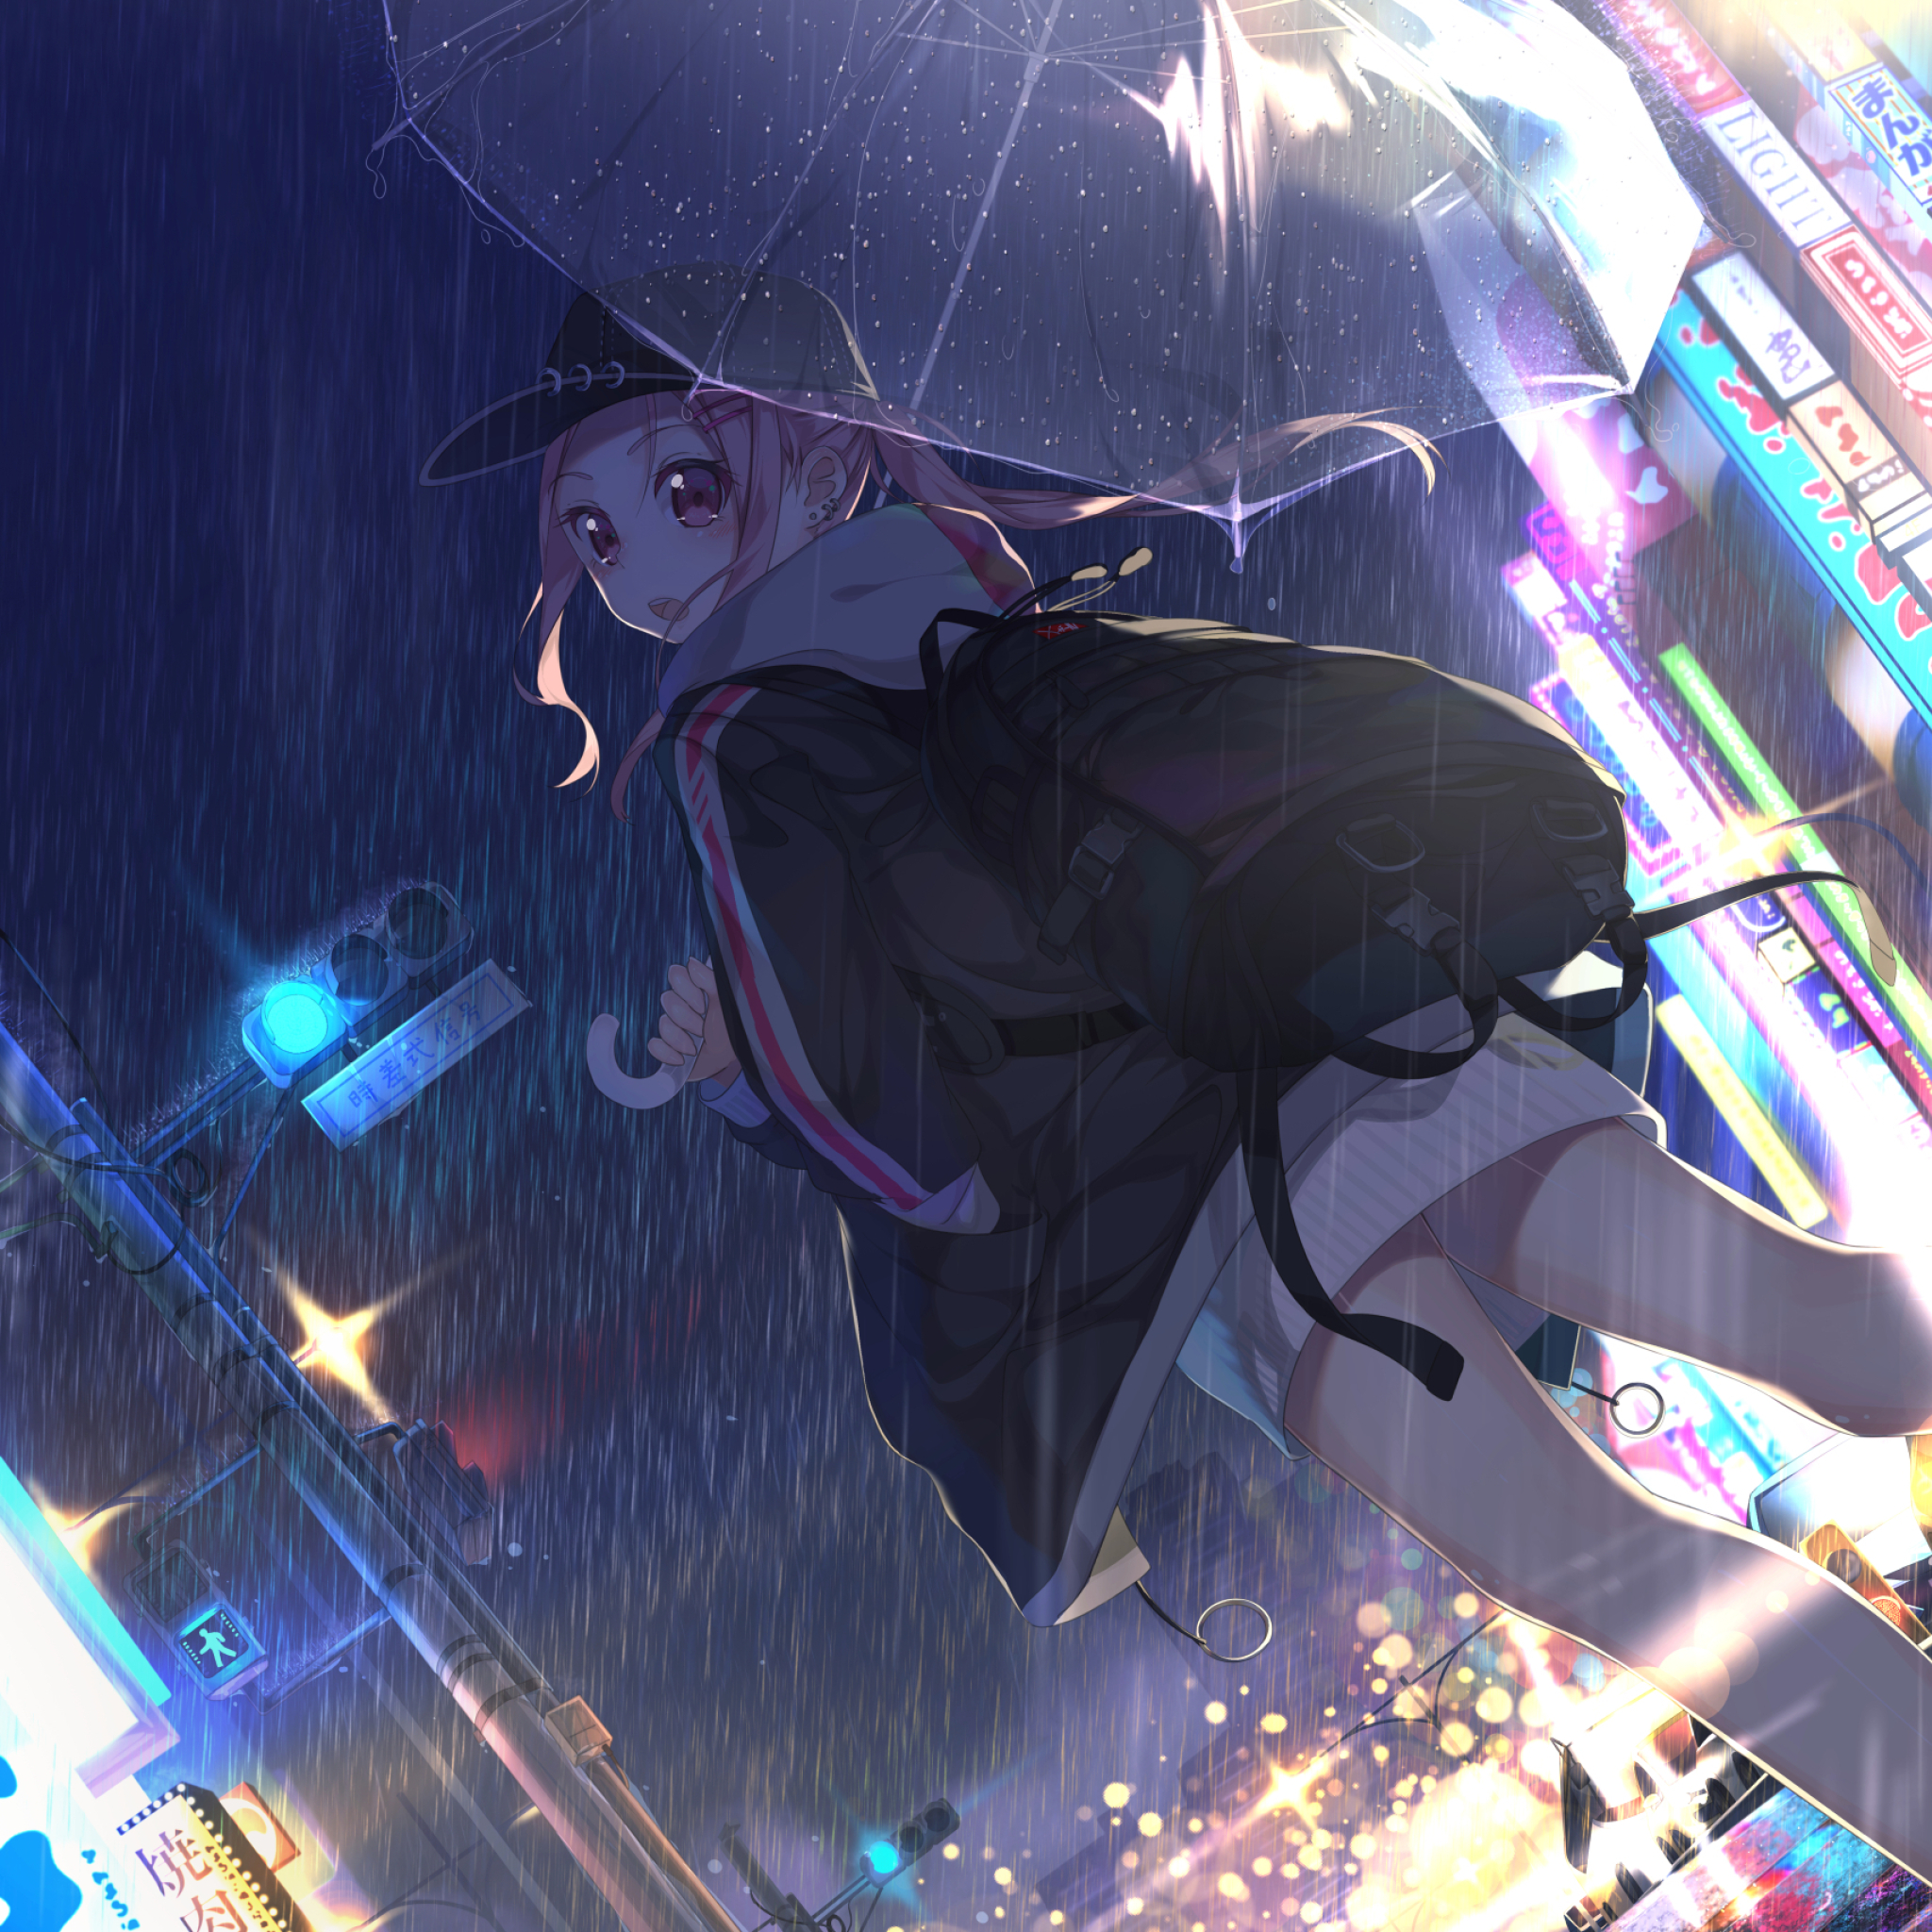 anime girl with umbrella in rain a21pbWyUmZqaraWkpJRnZWltrWdlaW0